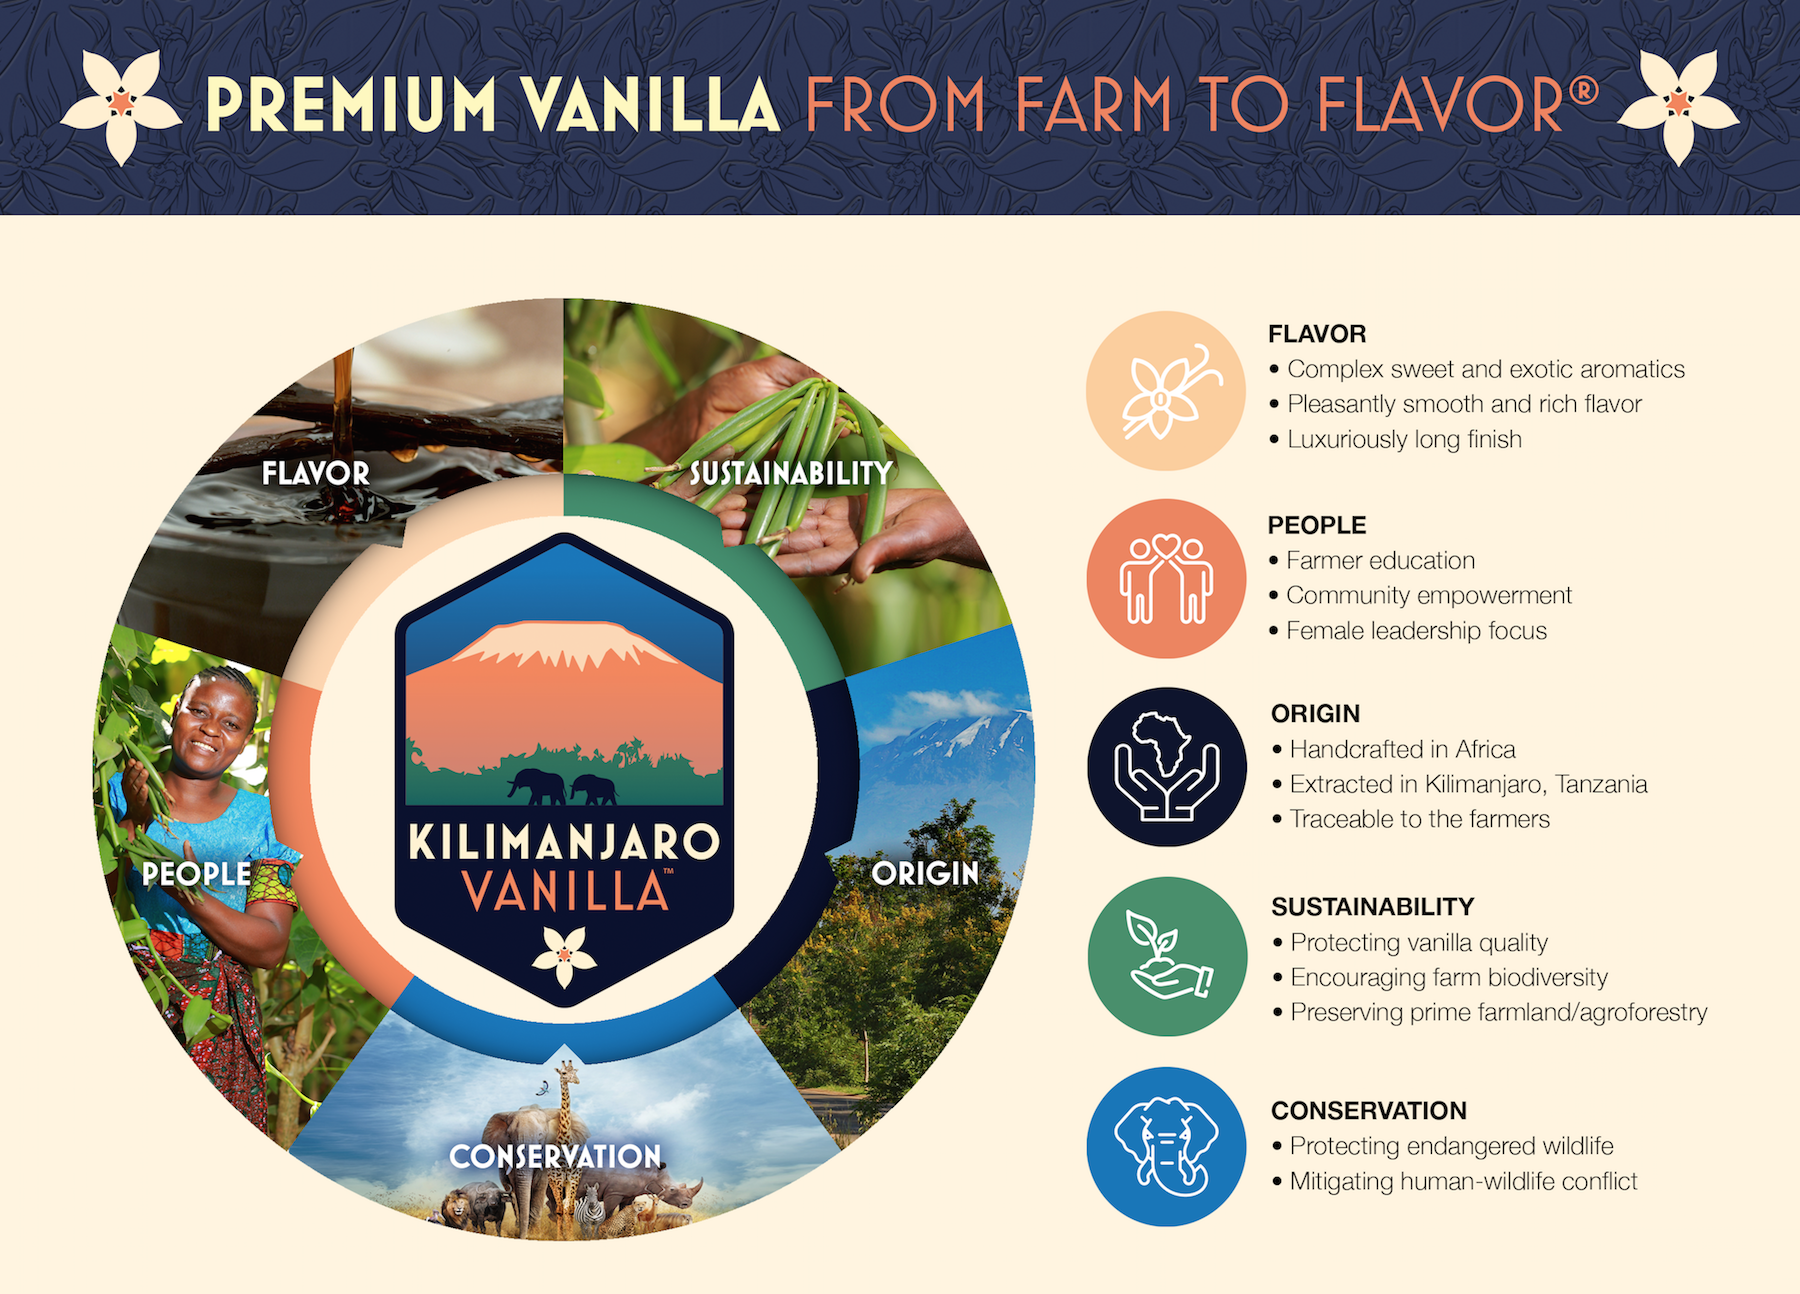 Premium Vanilla From Farm to Flavor